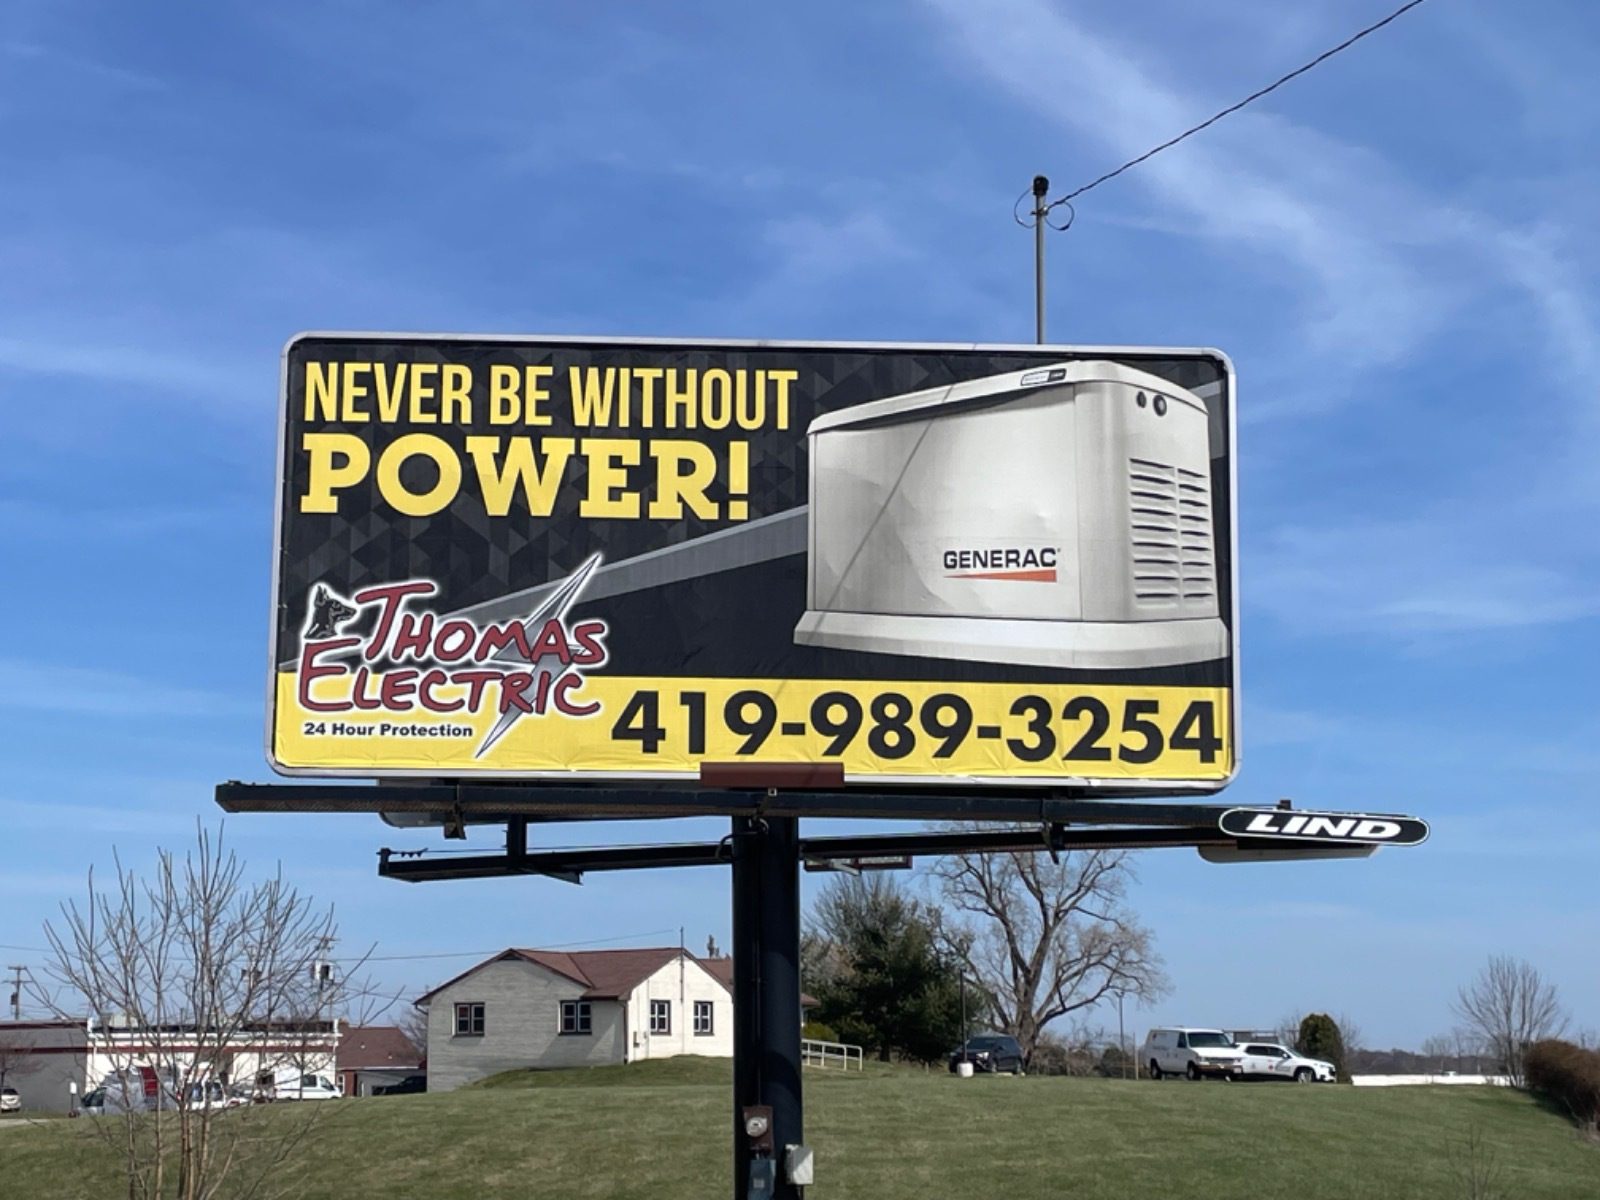 Thomas Electric Billboard, generator billboard, Generac billboard